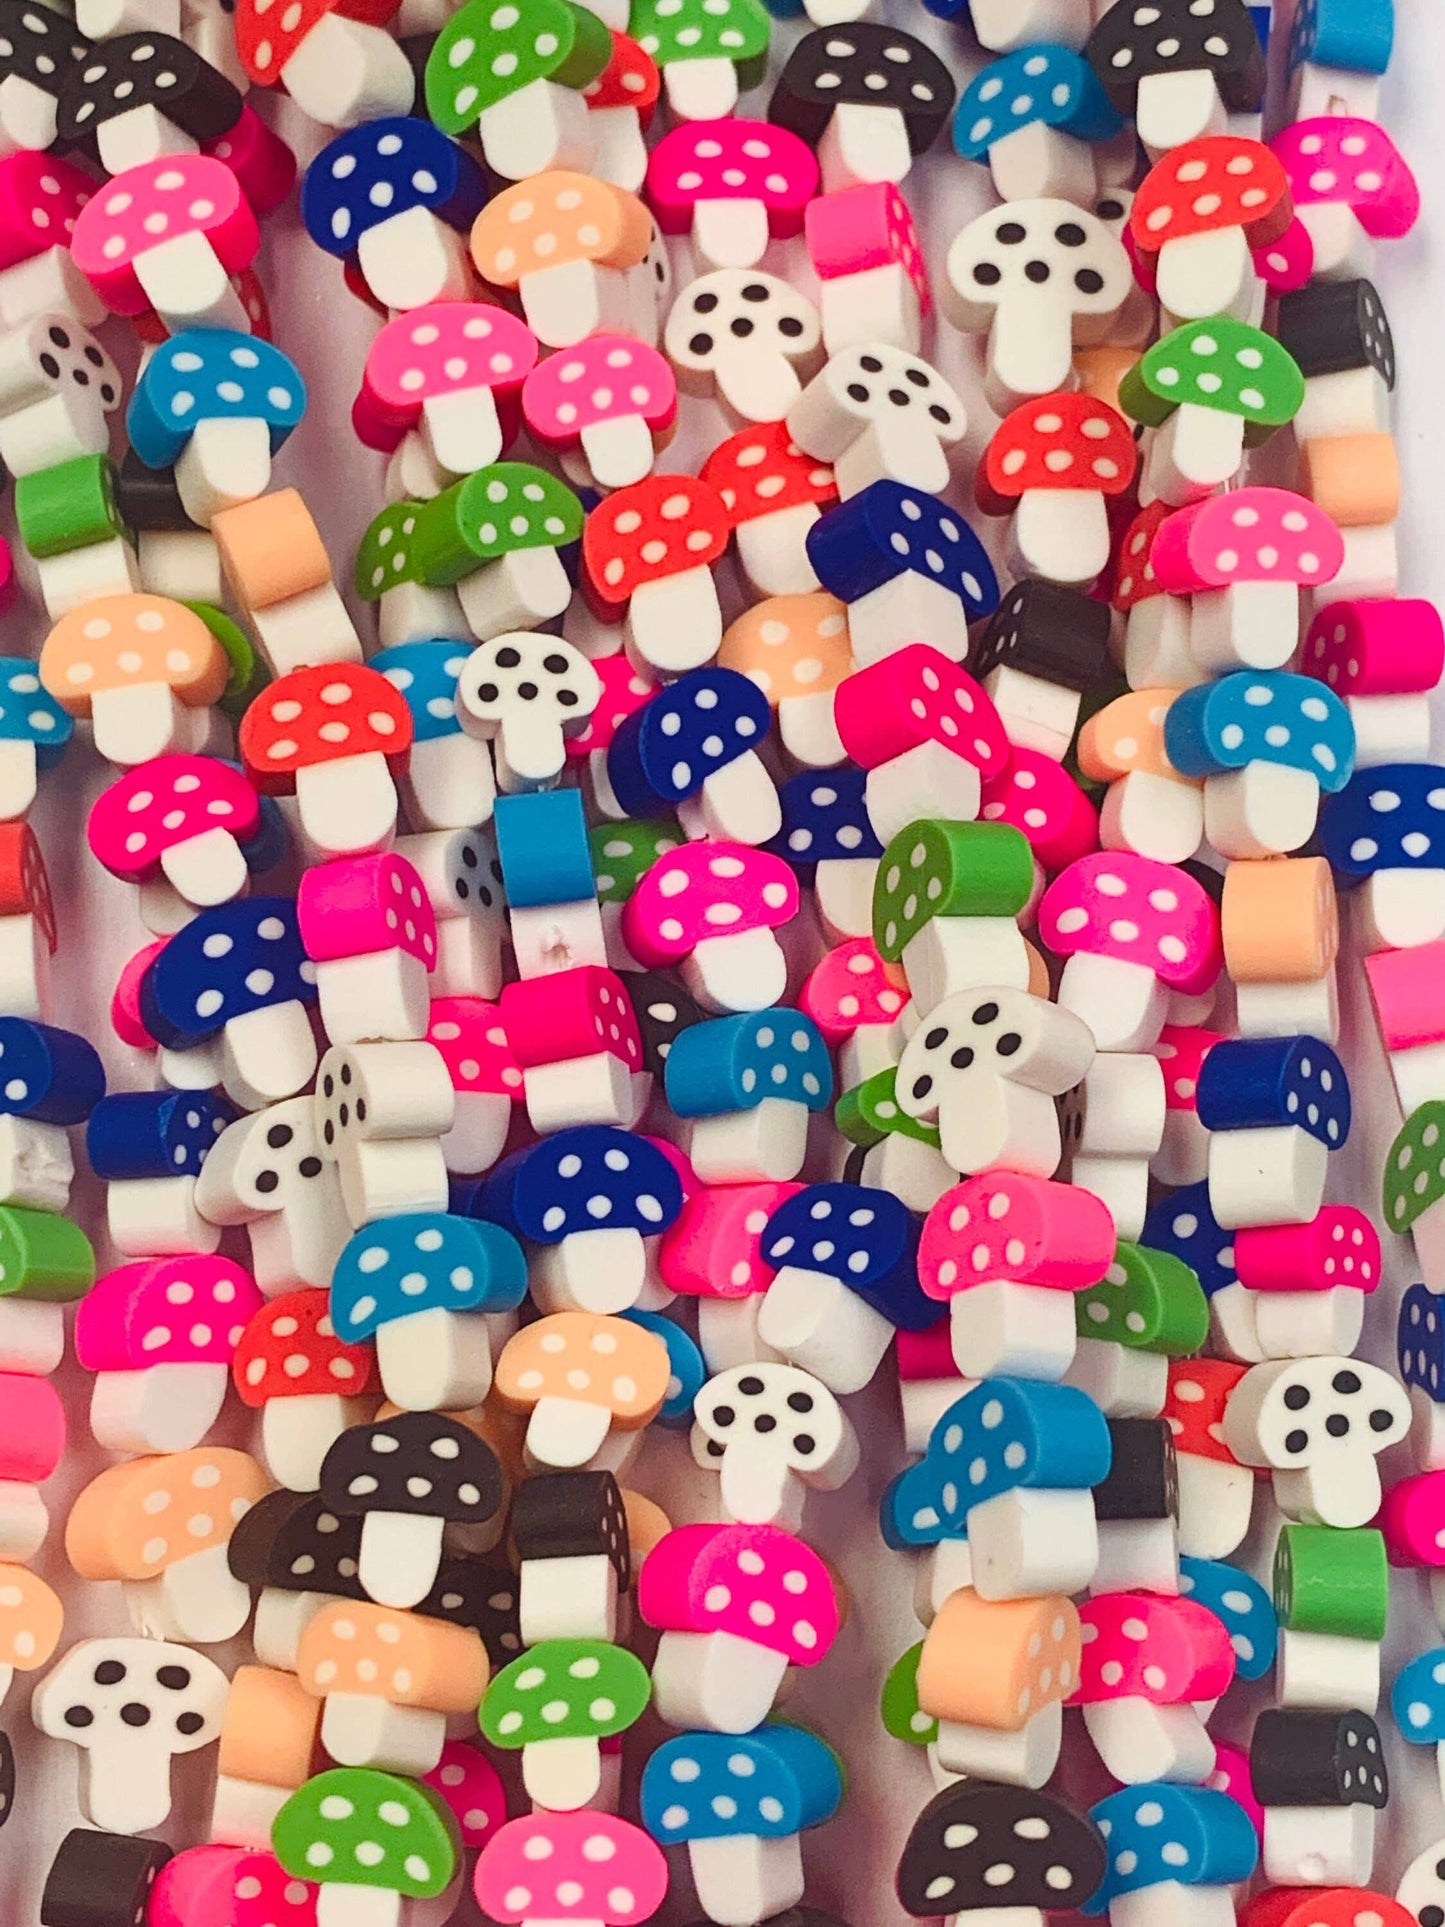 Strand of Colorful Mushroom Beads, Shroom Beads, Bright Y2K Mushroom Beads, Mini Mushrooms For Bracelet, Boho Bead DIY Jewelry Making